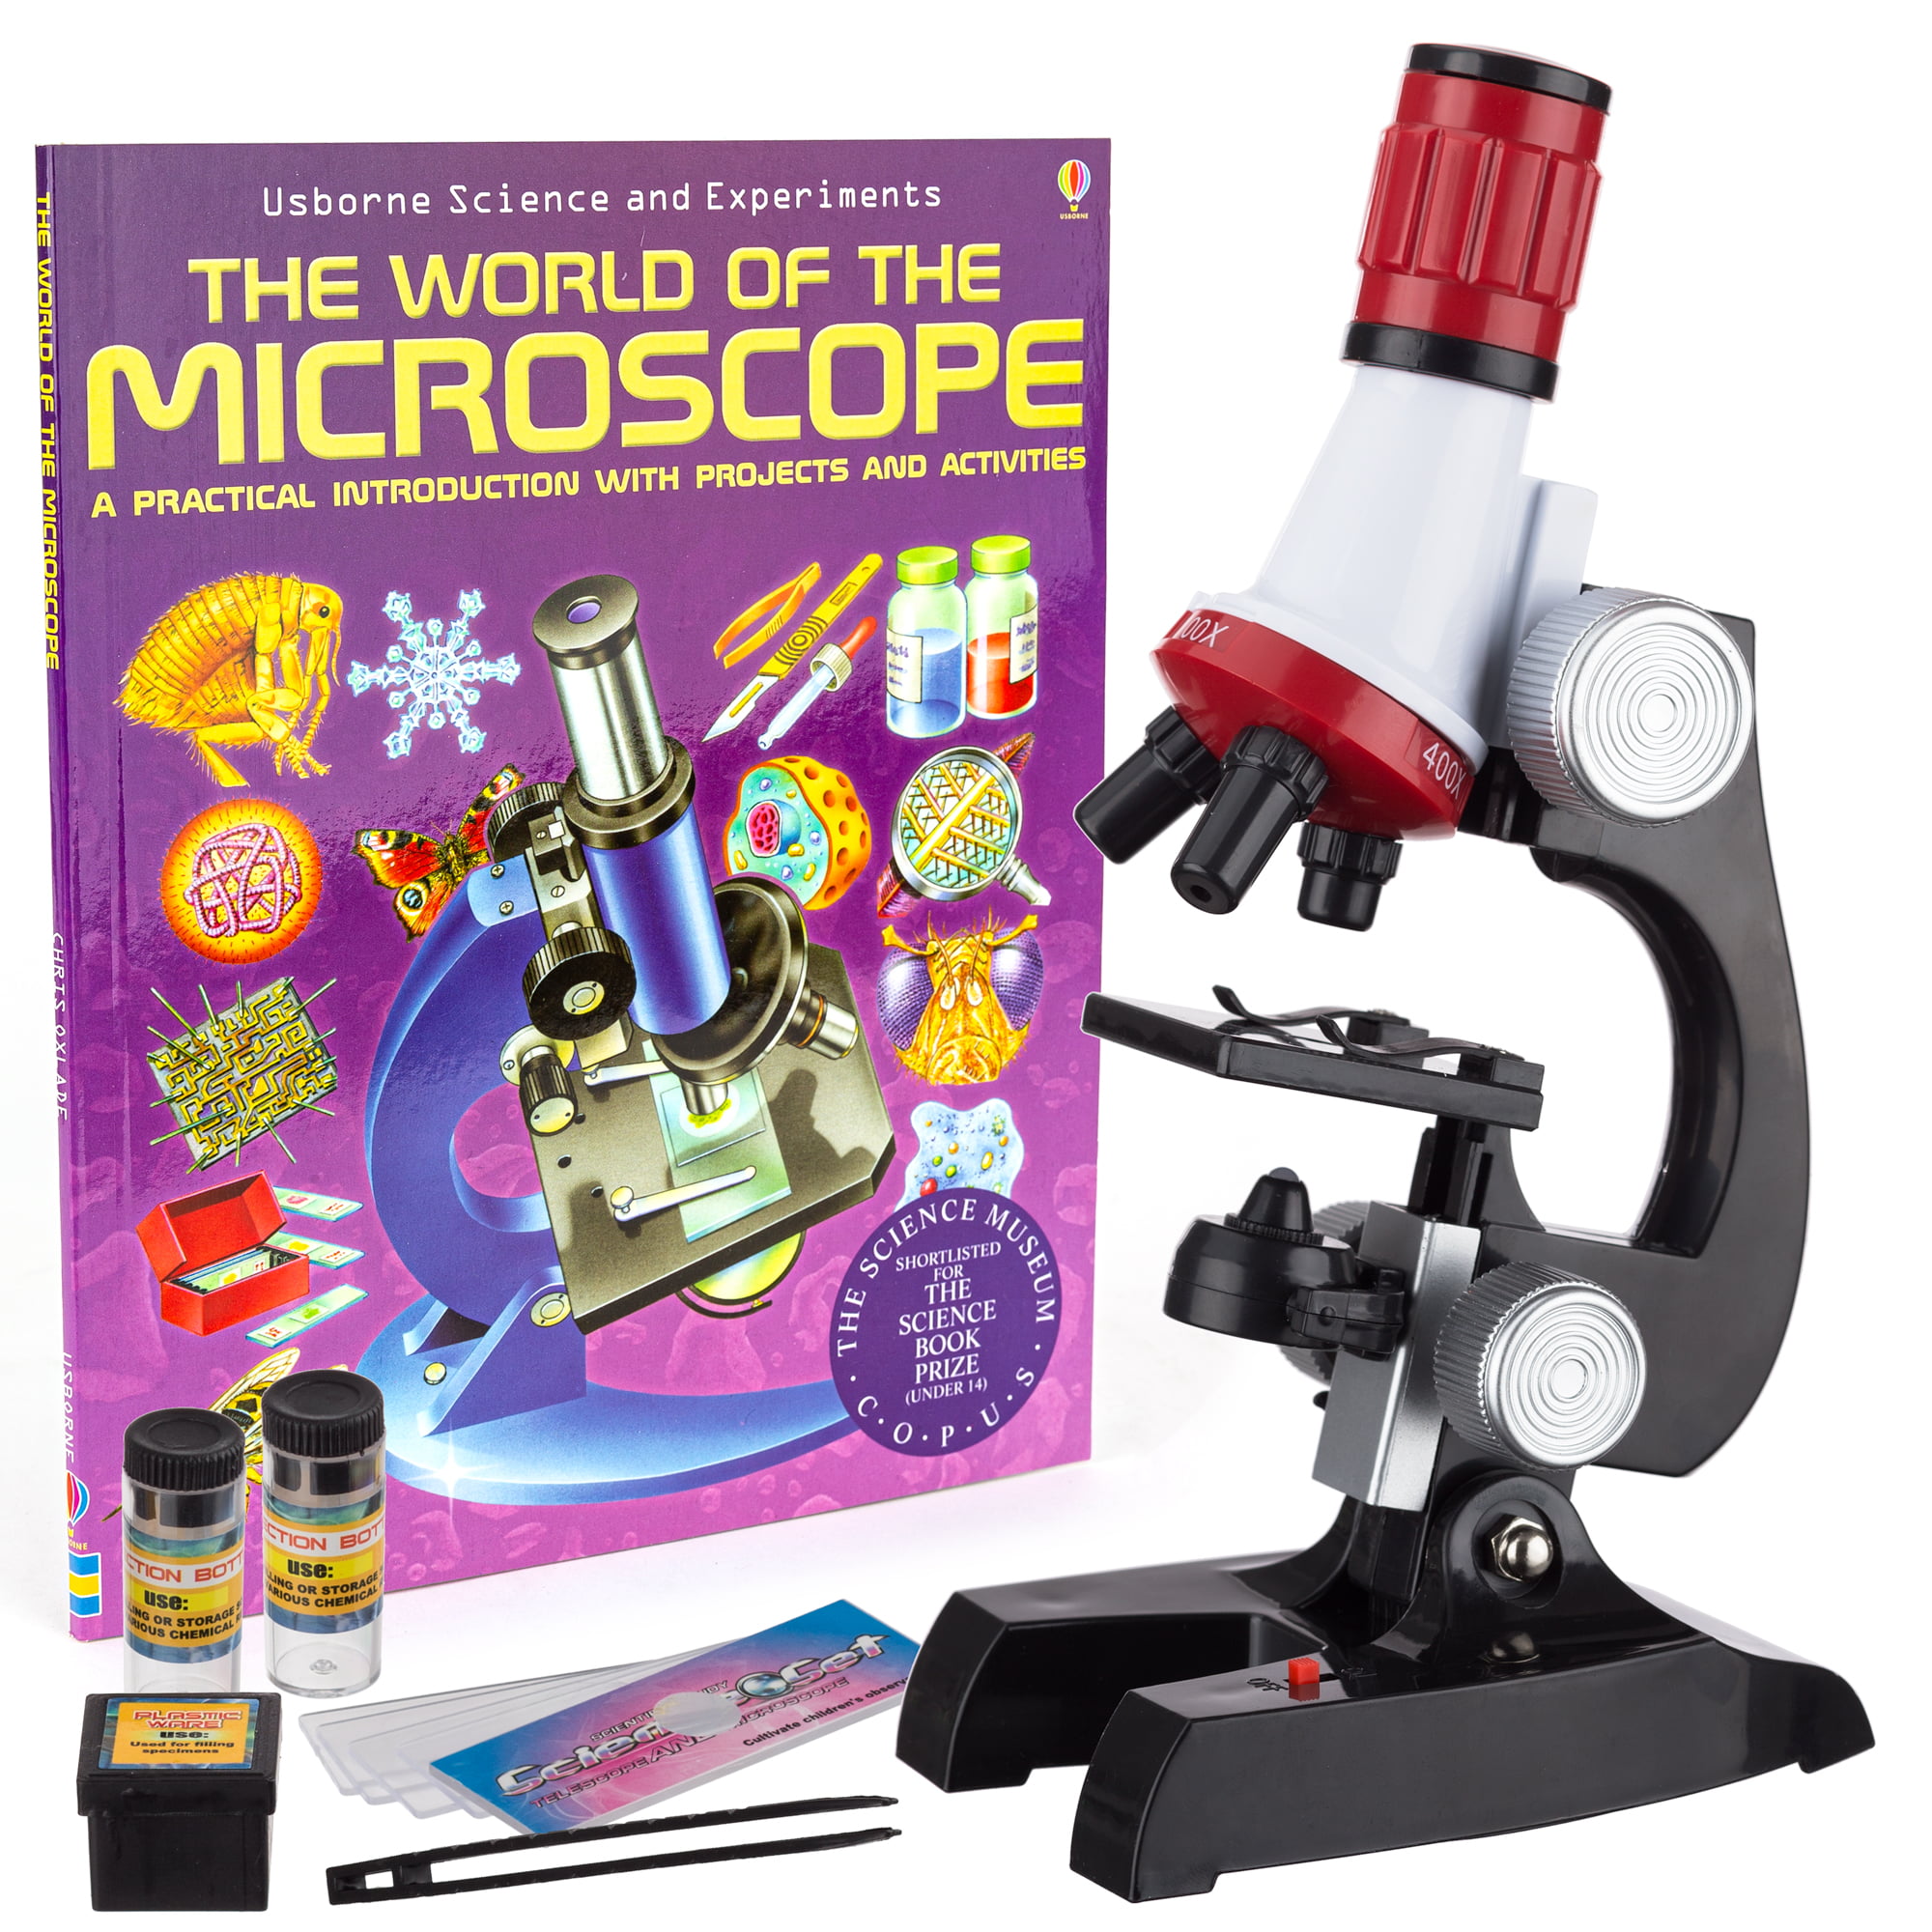 GAOZ Microscope Biological Microscope,X-S-P100E Binocular LED Biological Microscope for Children Students Kids School for School Laboratory,Home Science Learning 